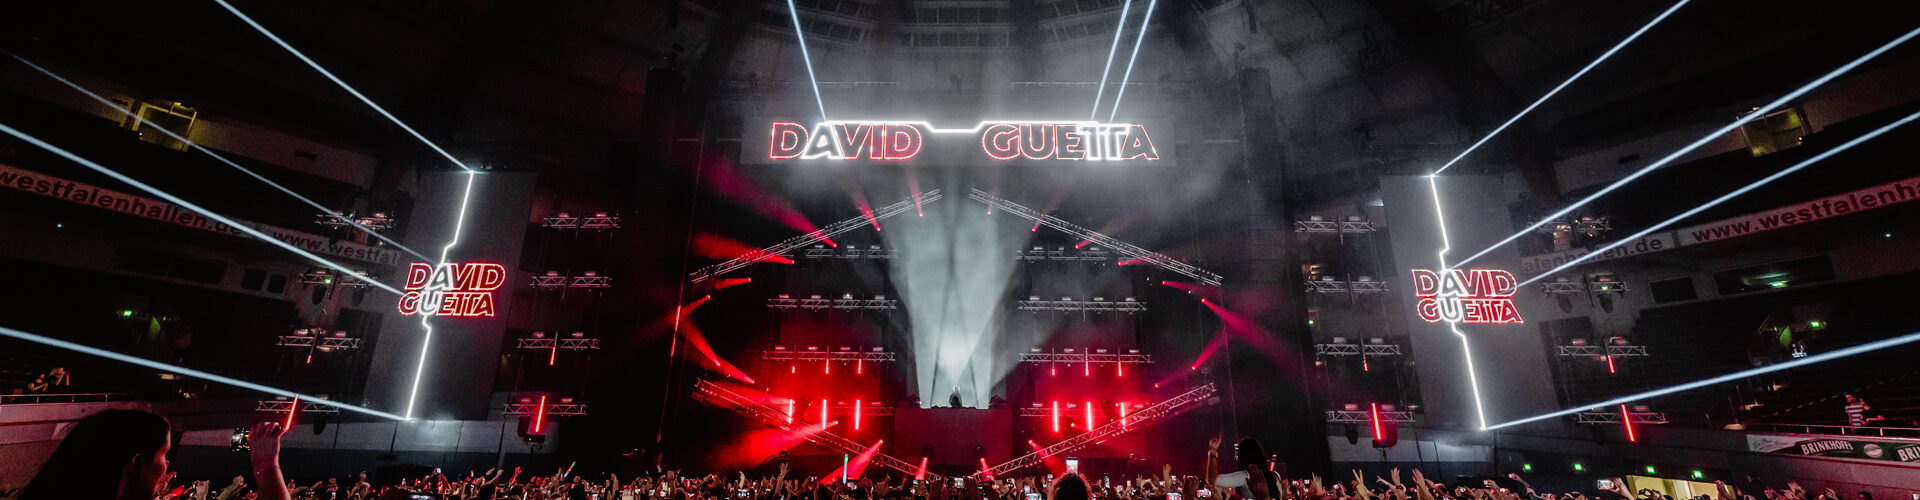 Header laserfabrik David Guetta Tour 2018 03